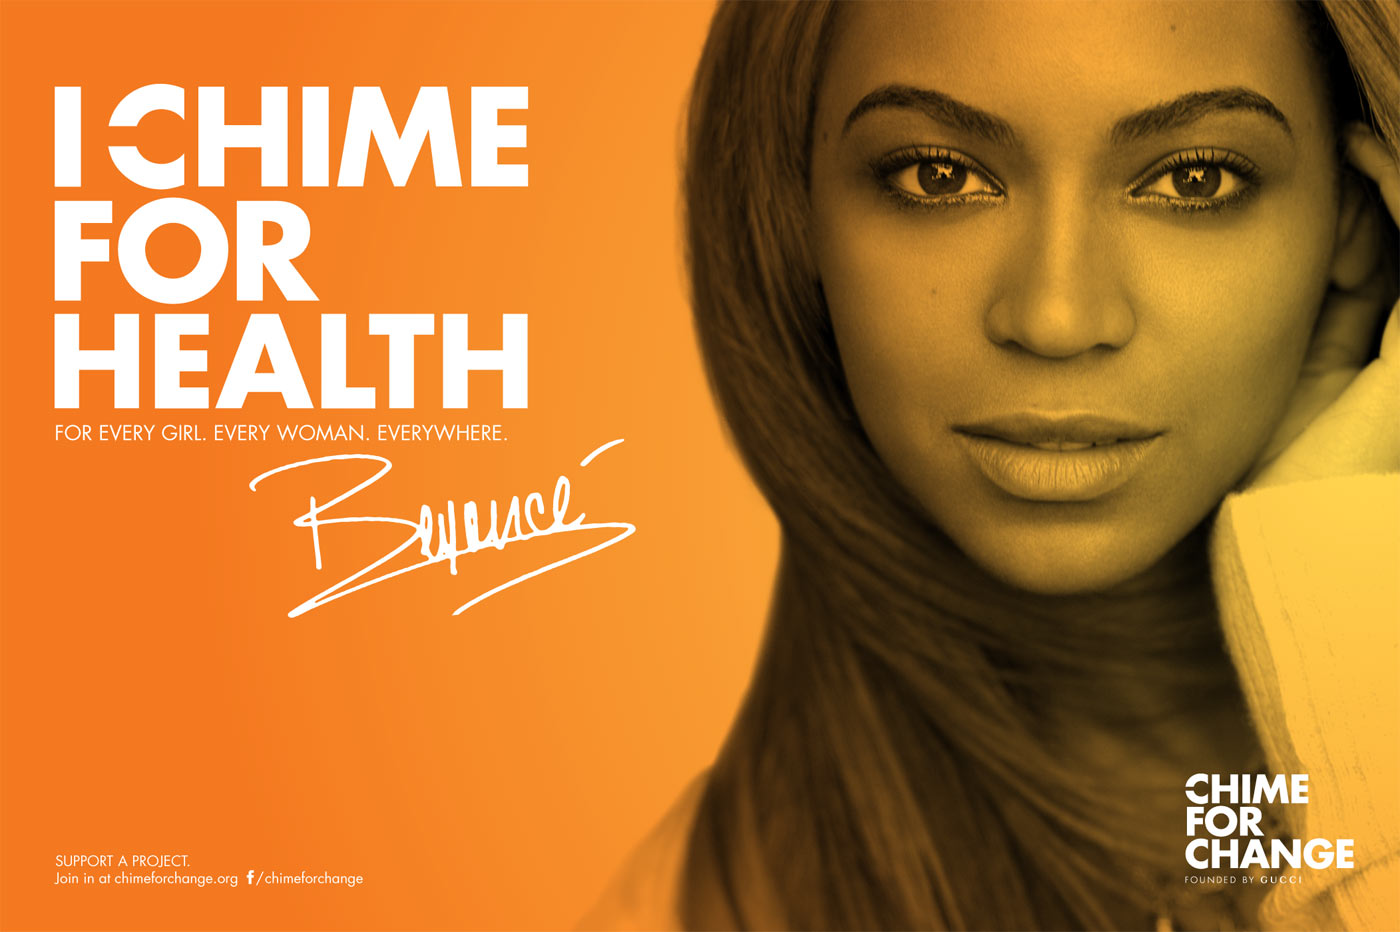 Image via <a href="http://www.beyonce.com/news/chime-for-change">Beyonce.com</a>